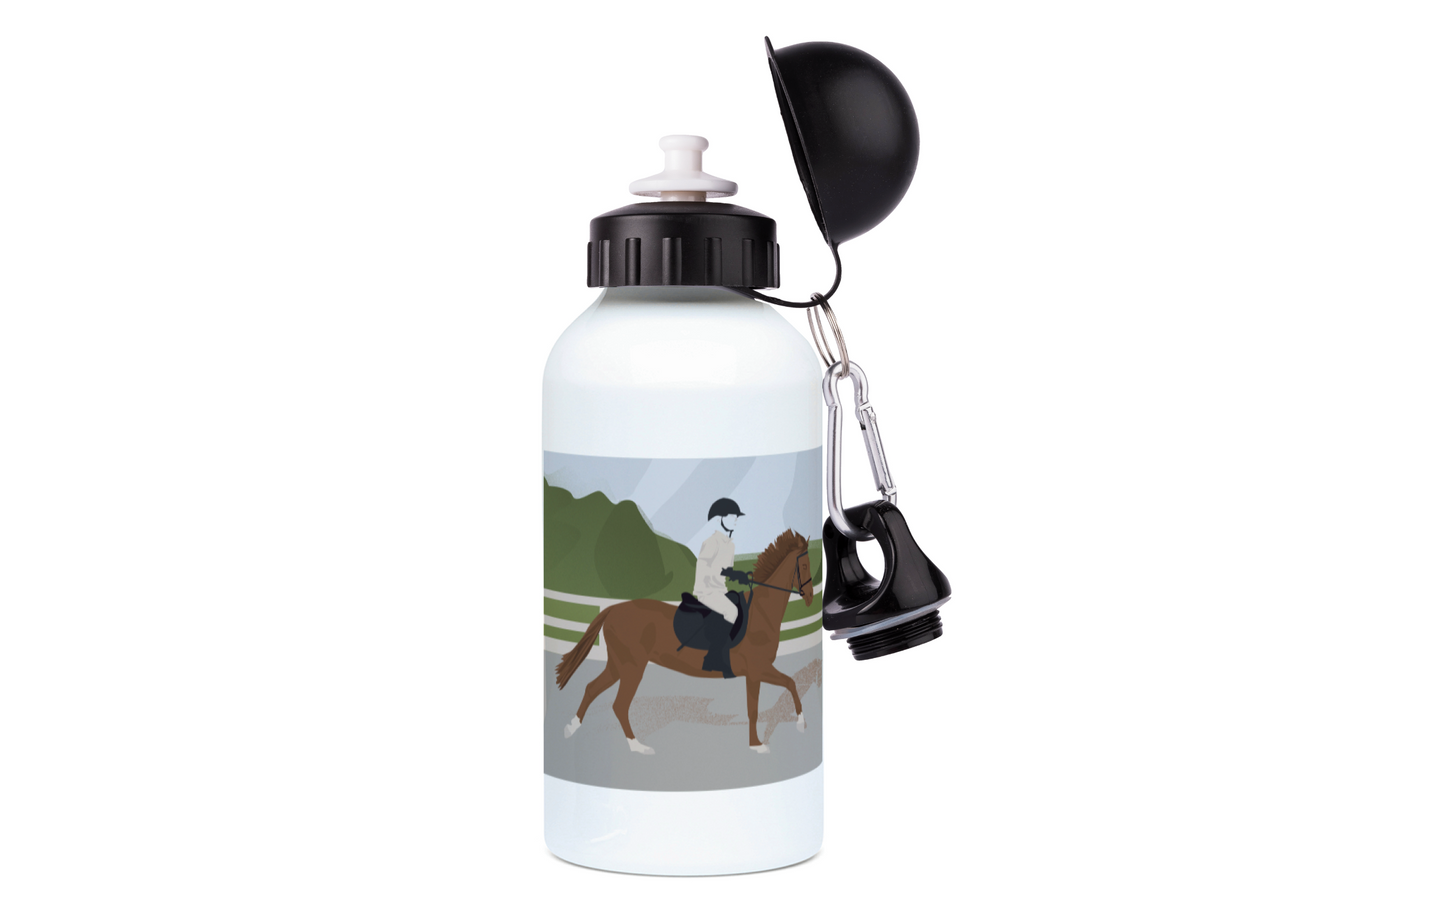 Aluminum horse riding bottle "On the horse" - Customizable